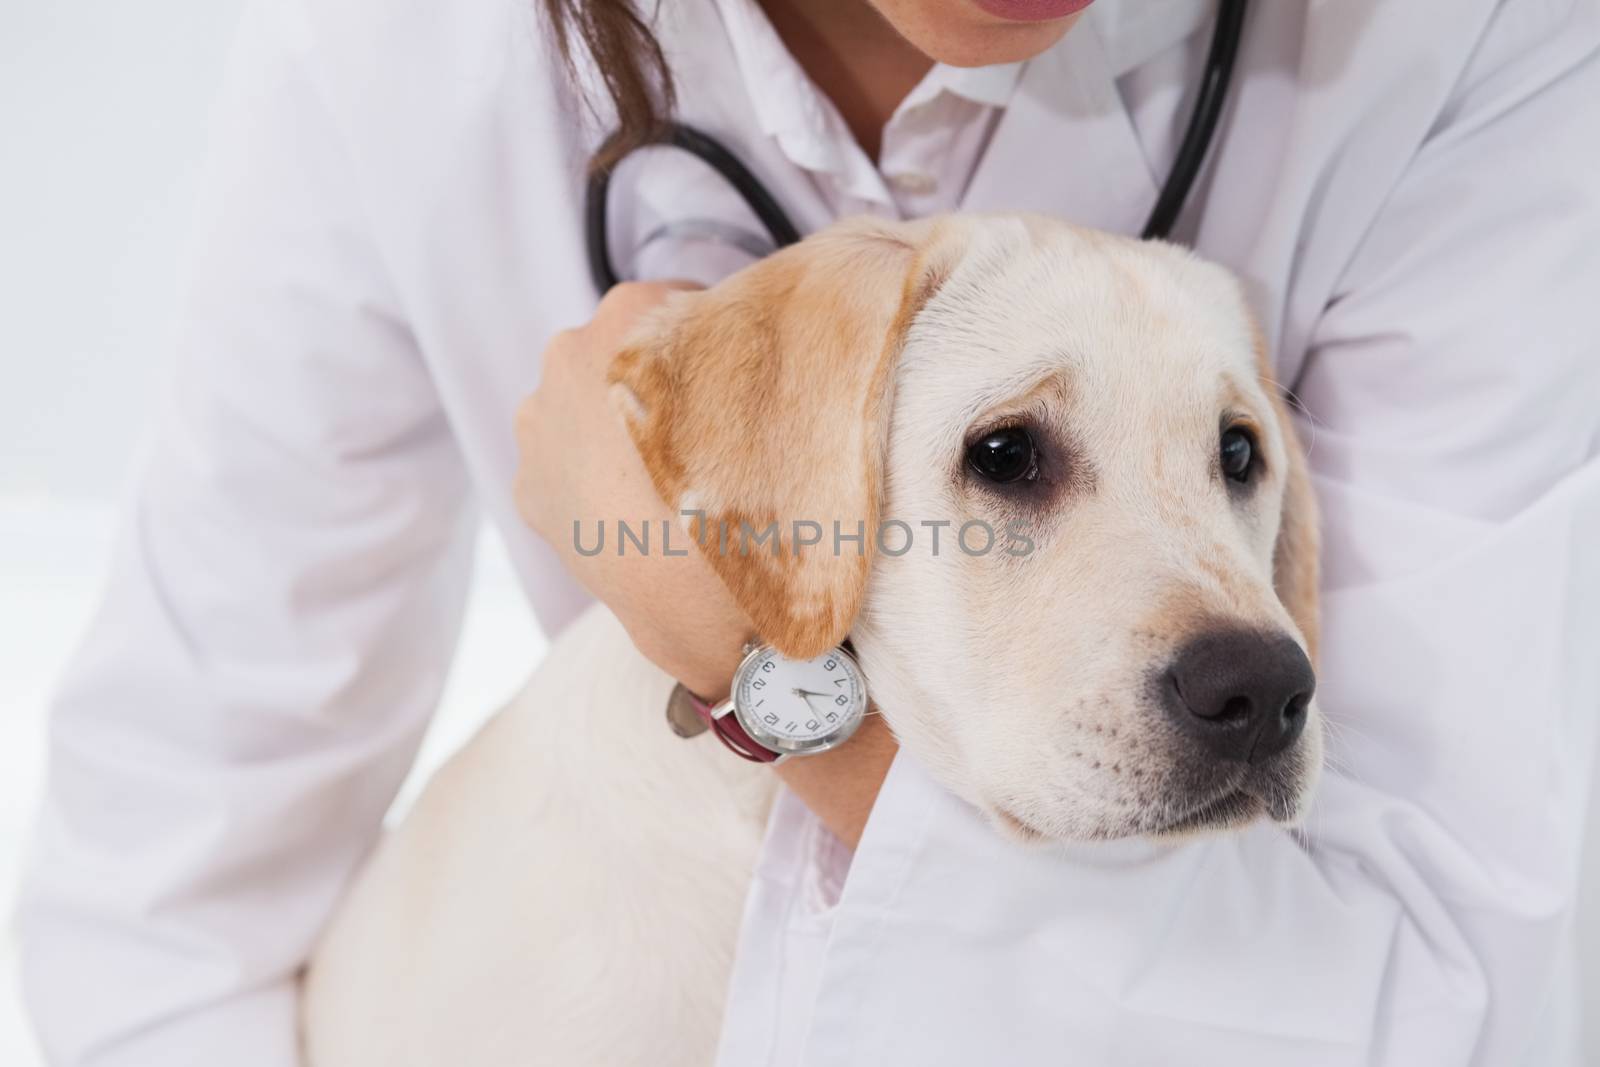 Veterinarian examining a cute dog by Wavebreakmedia